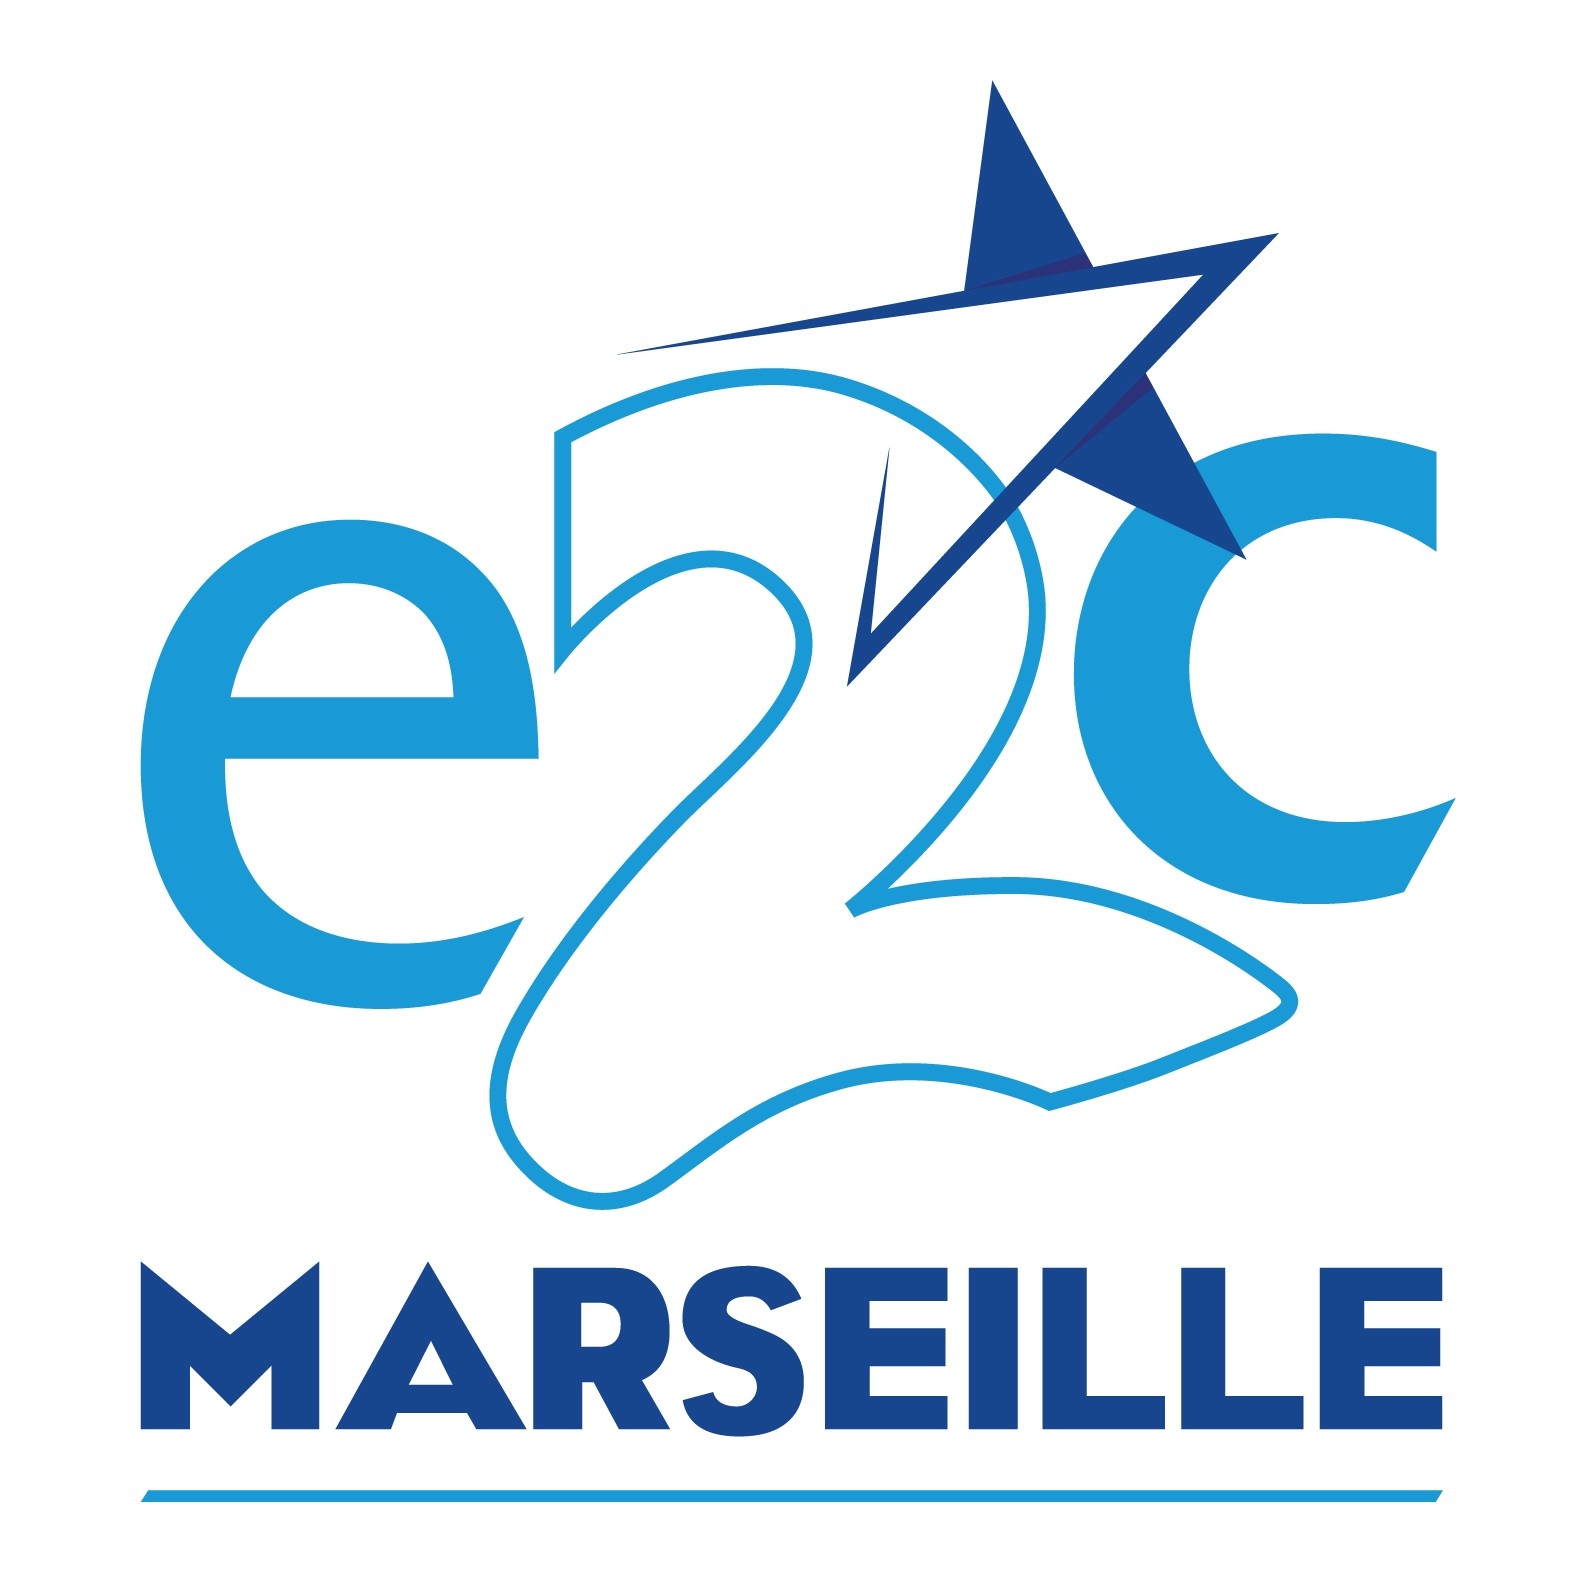 E2C Marseille